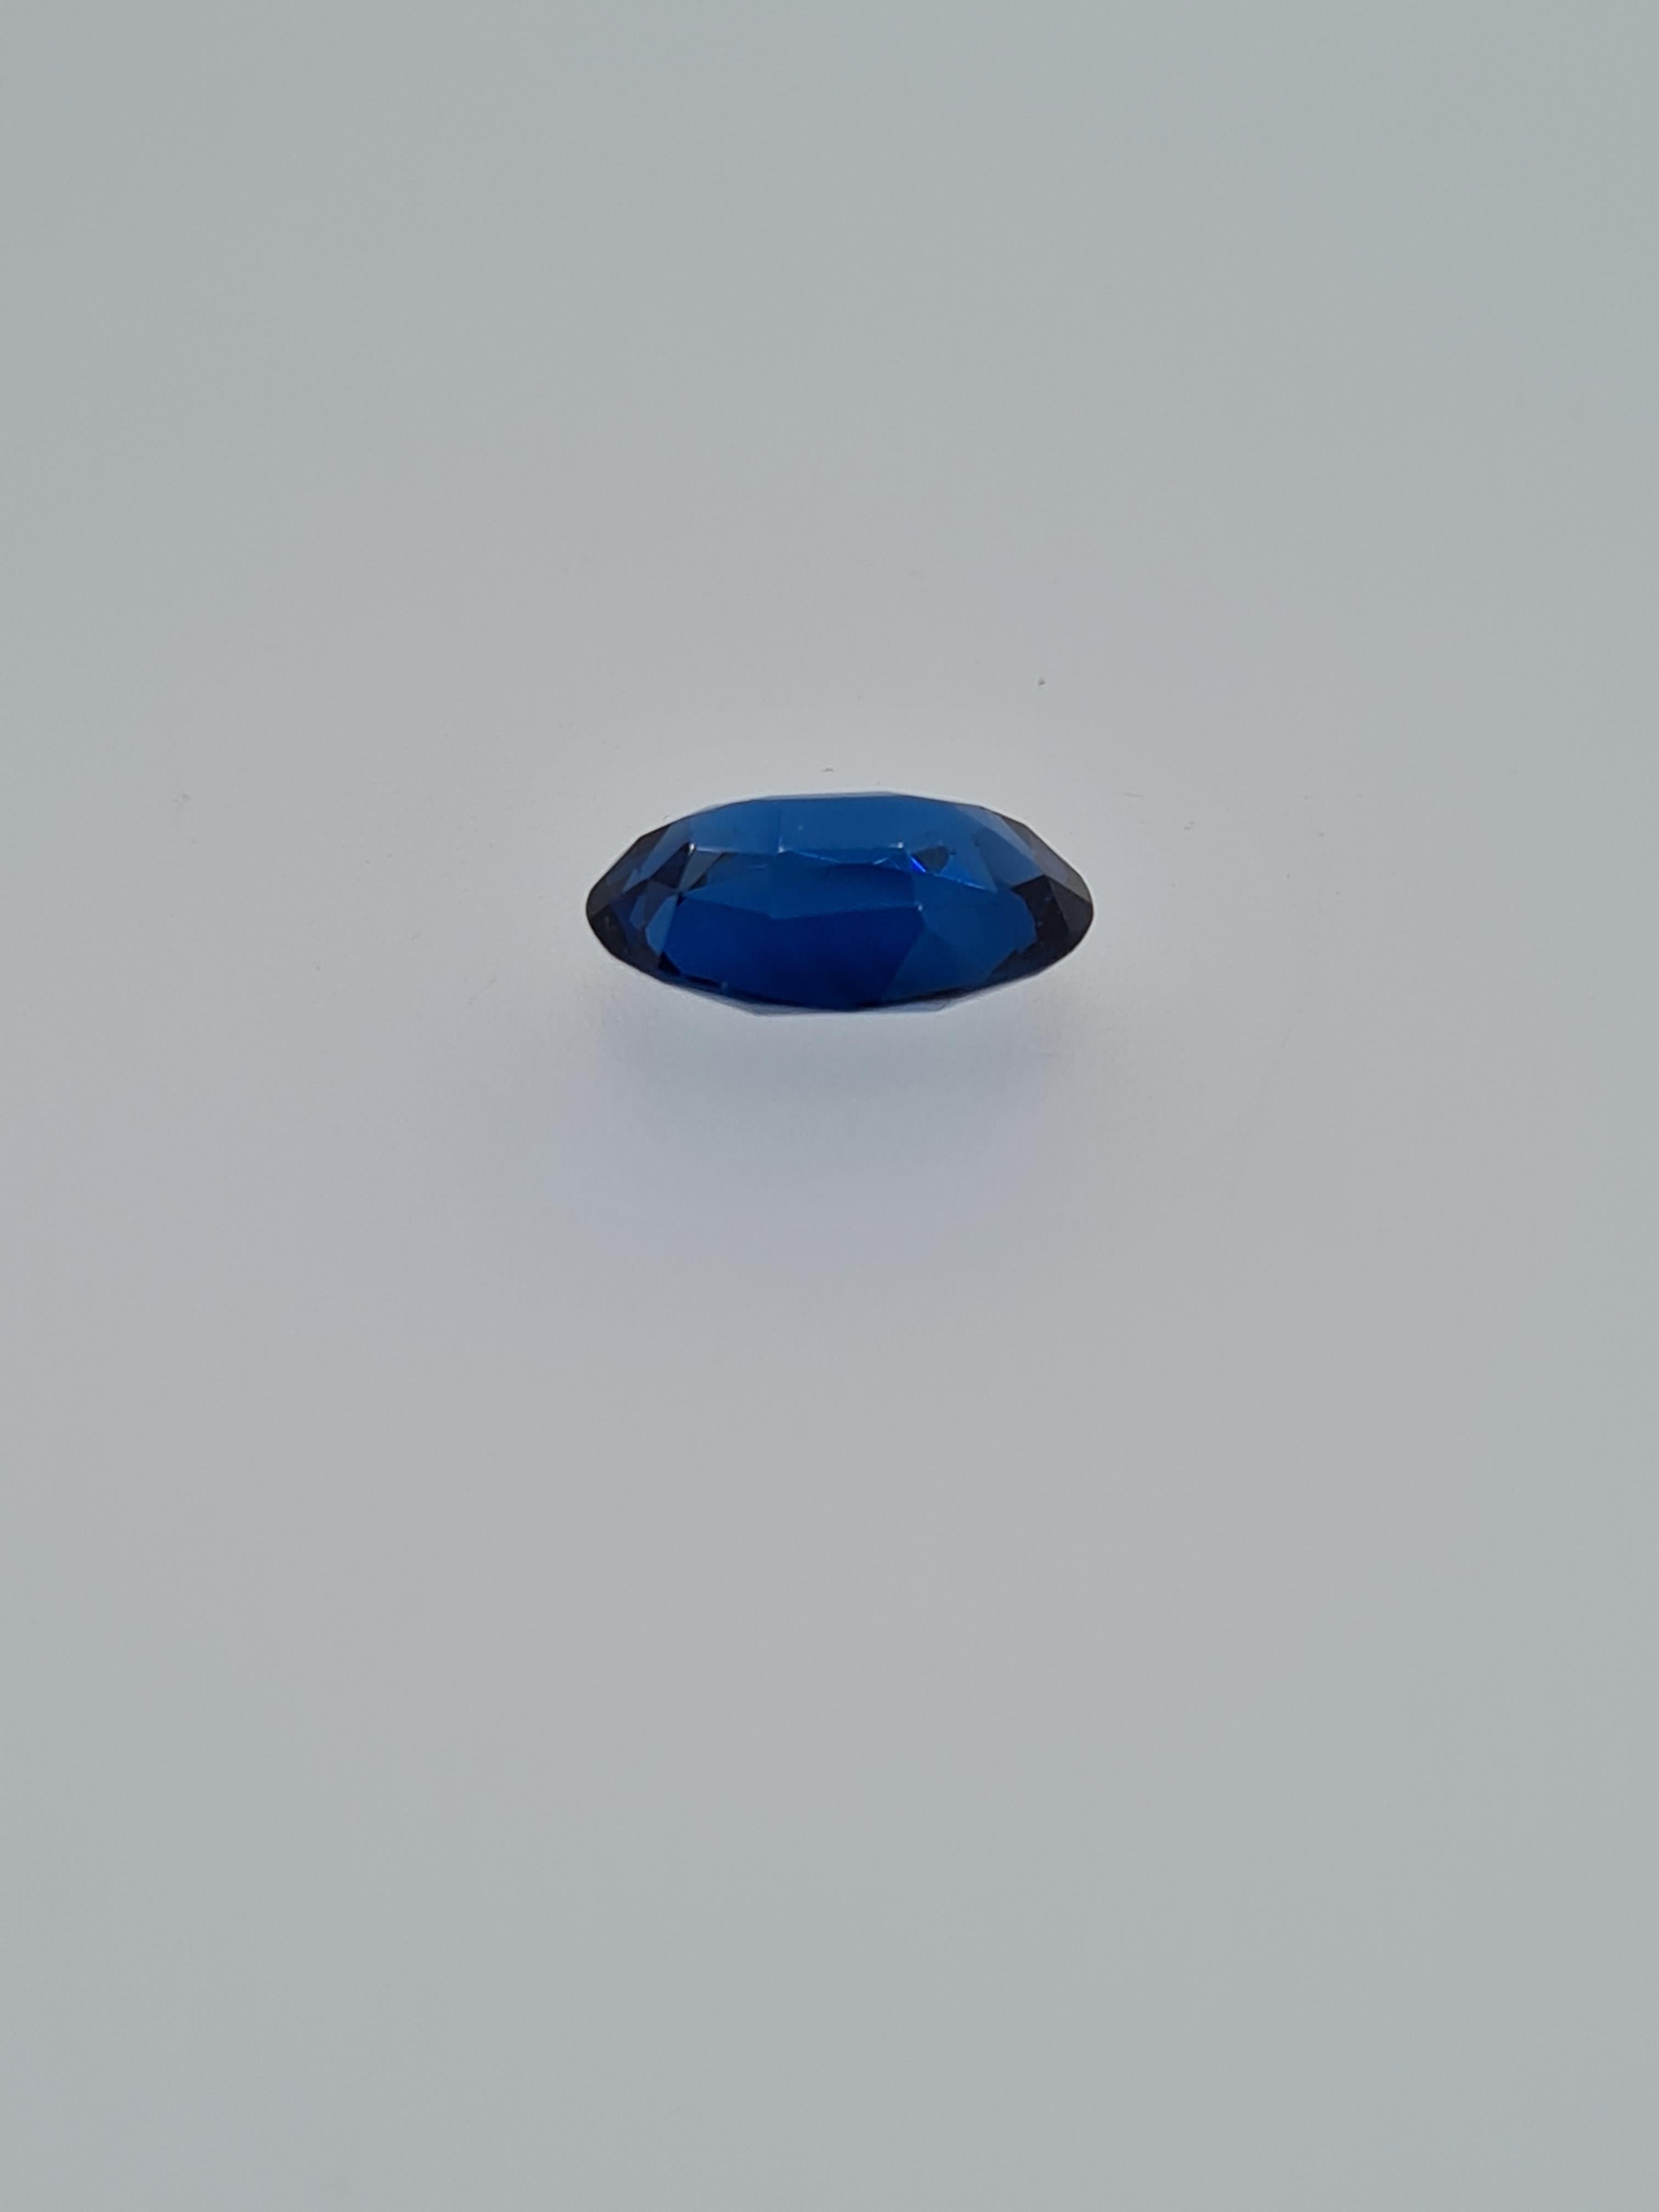 London blue topaz oval cut gem stone - Image 3 of 5